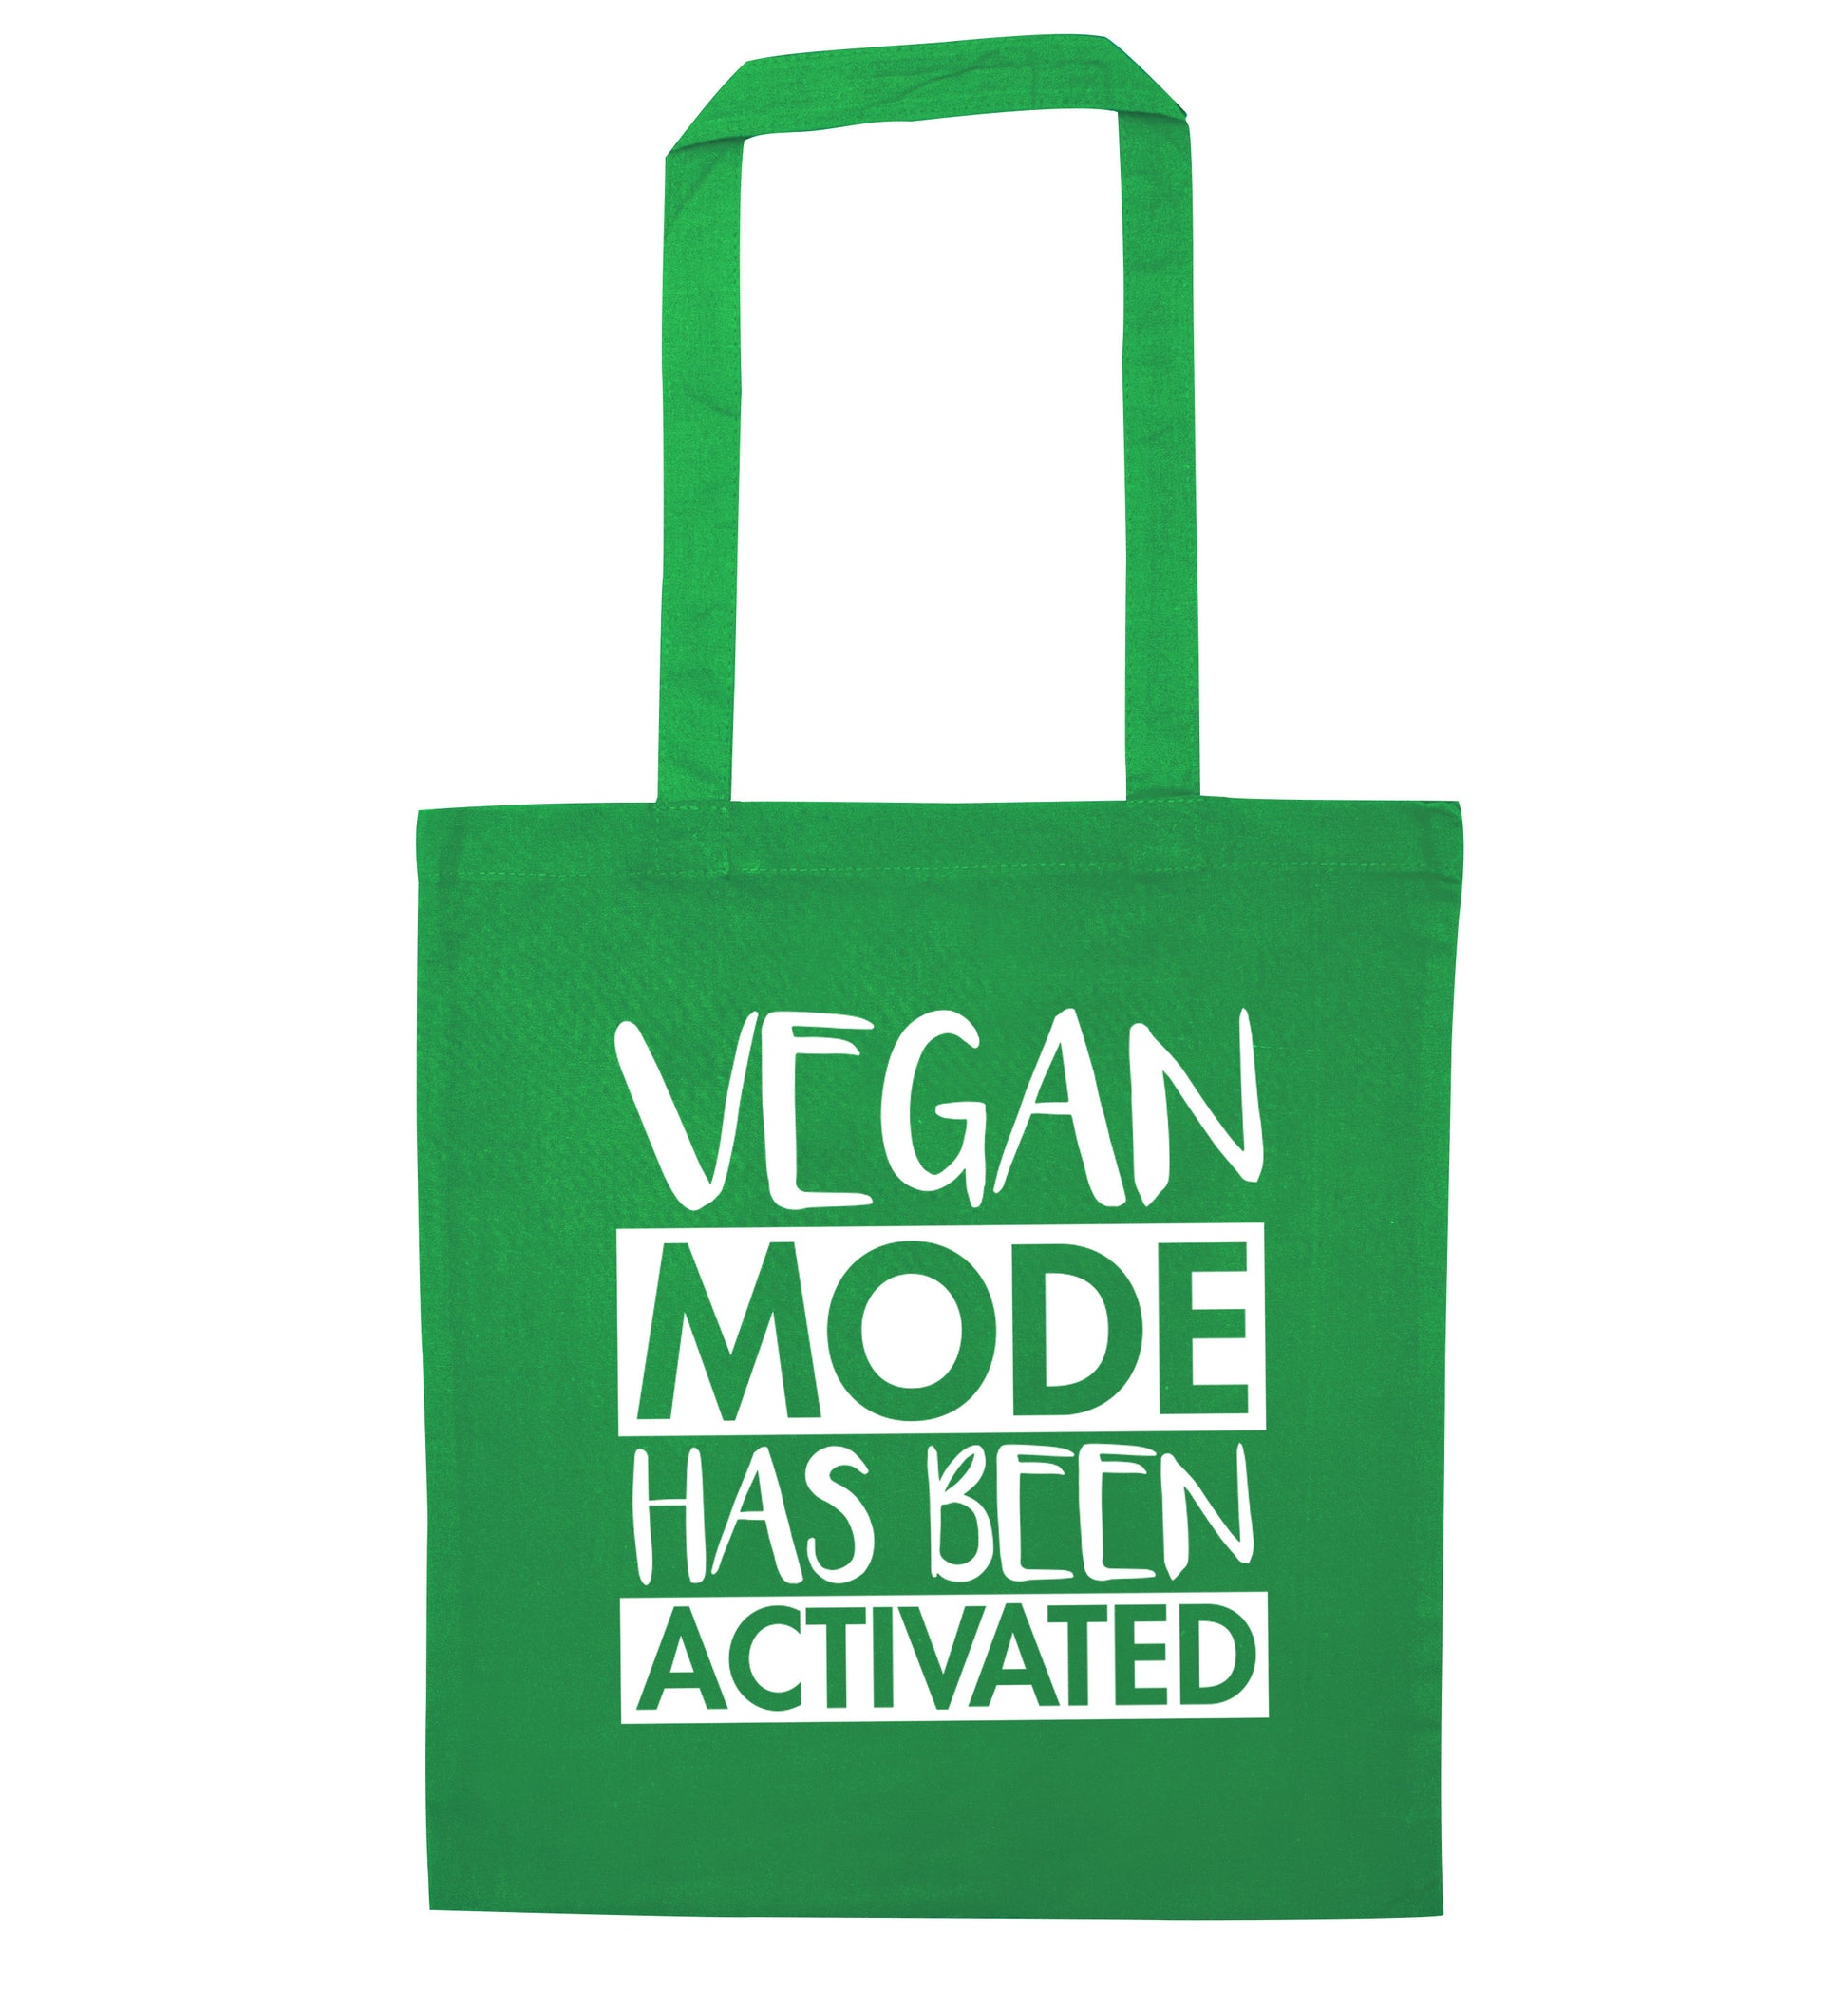 Vegan mode activated green tote bag